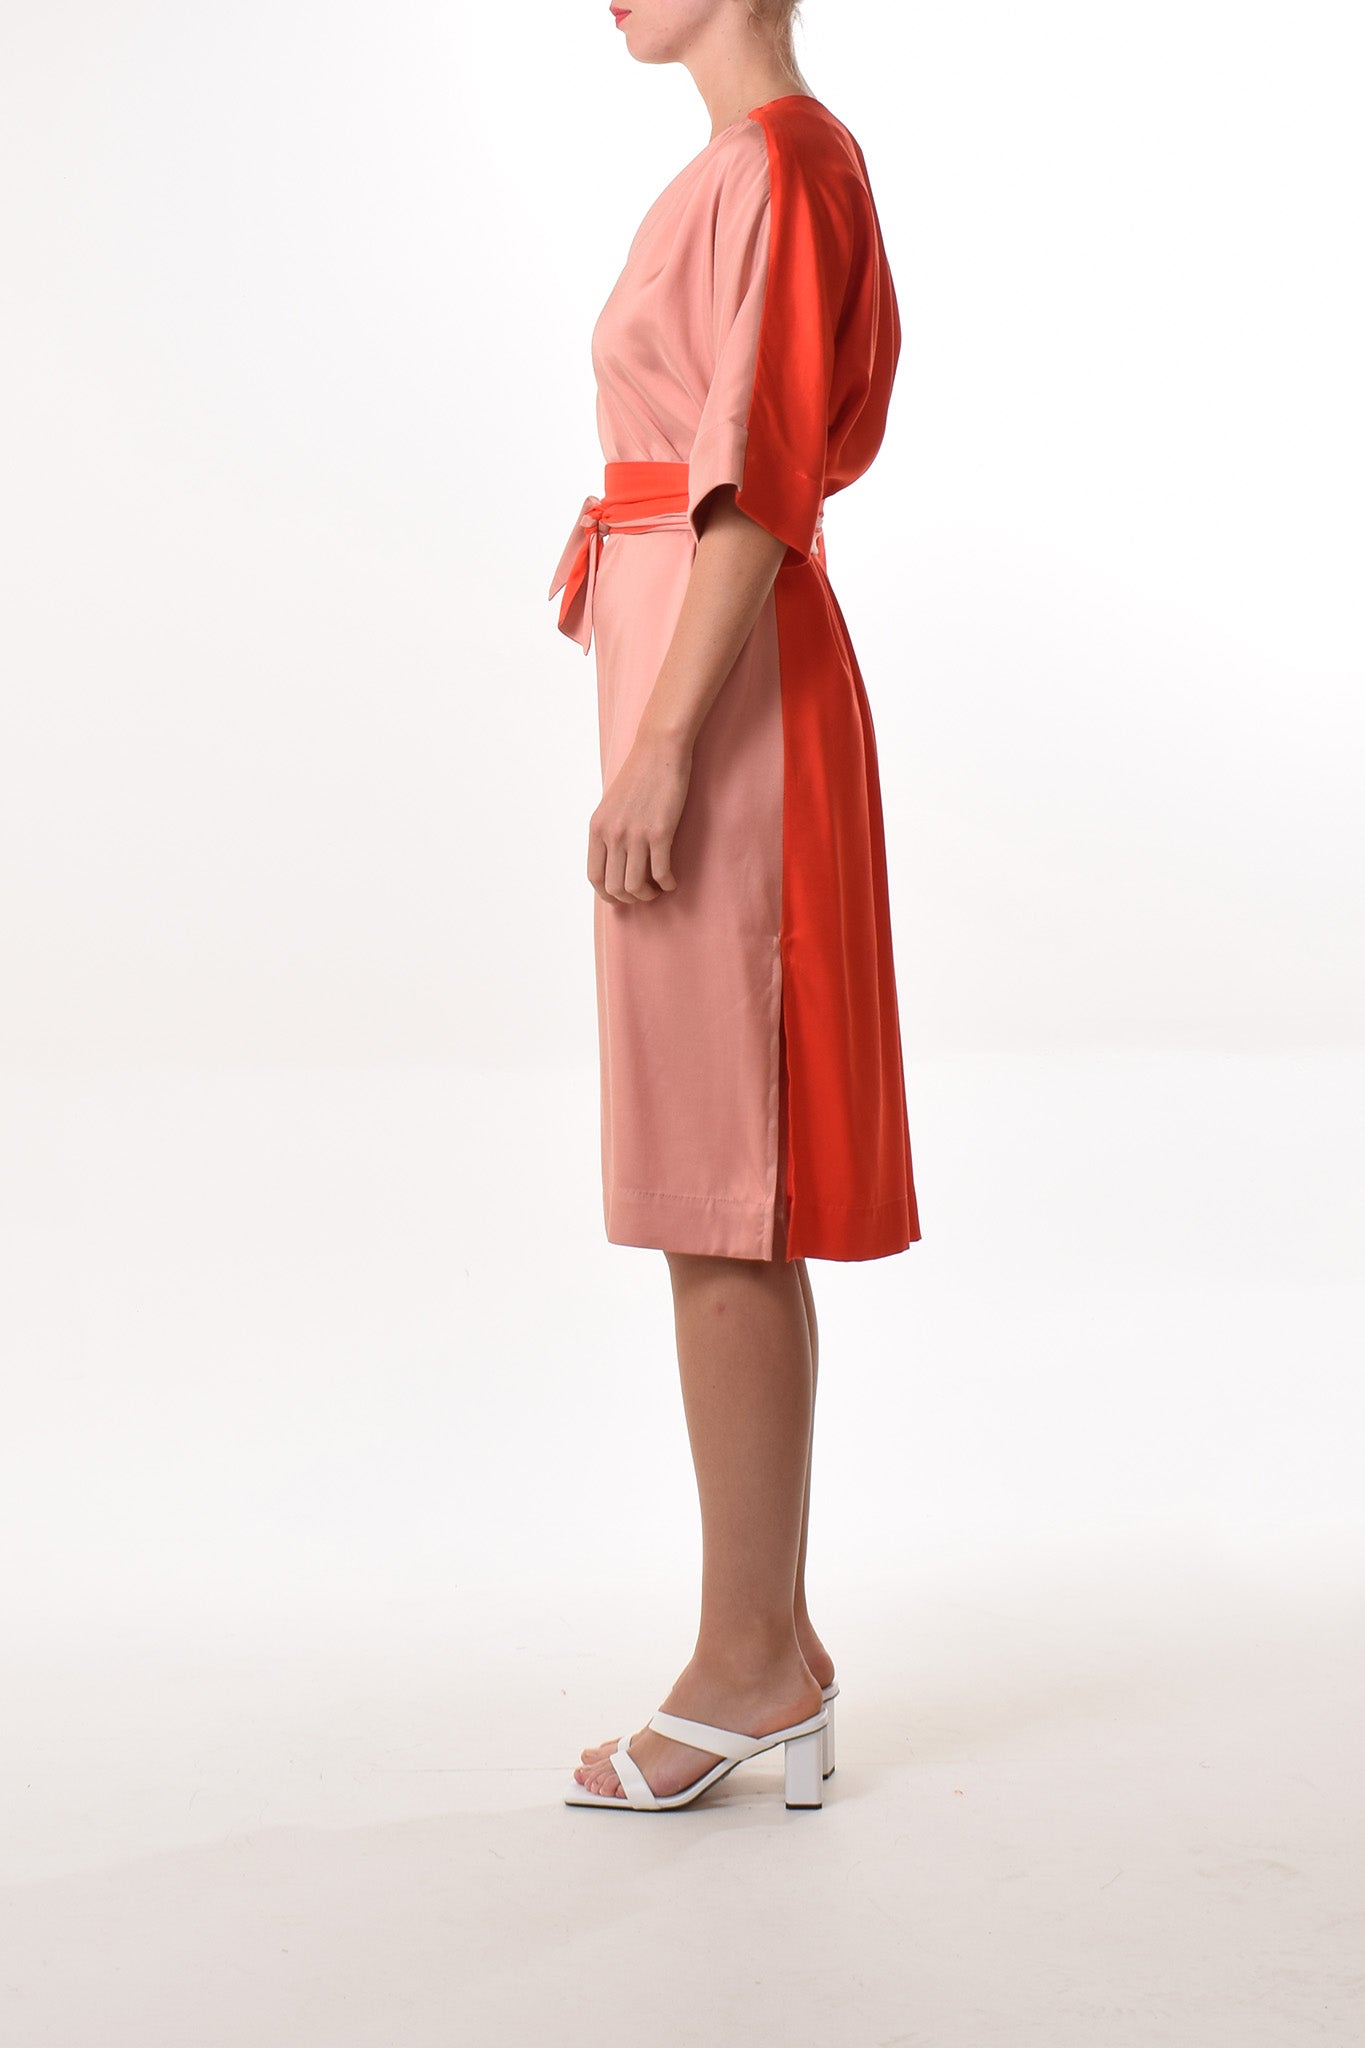 Trento dress in Rose/Red